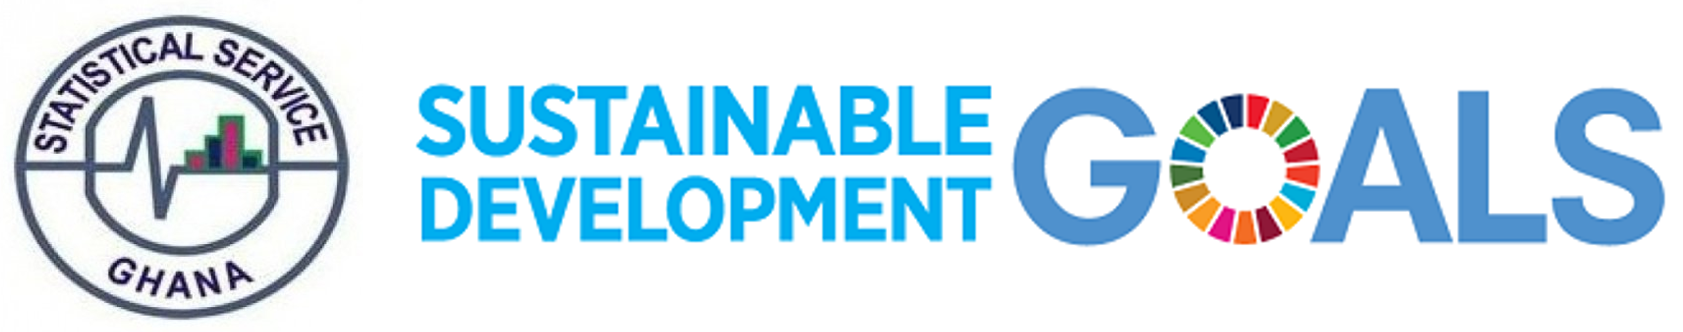 Sustainable Development Goals - 17 Goals to Transform our World